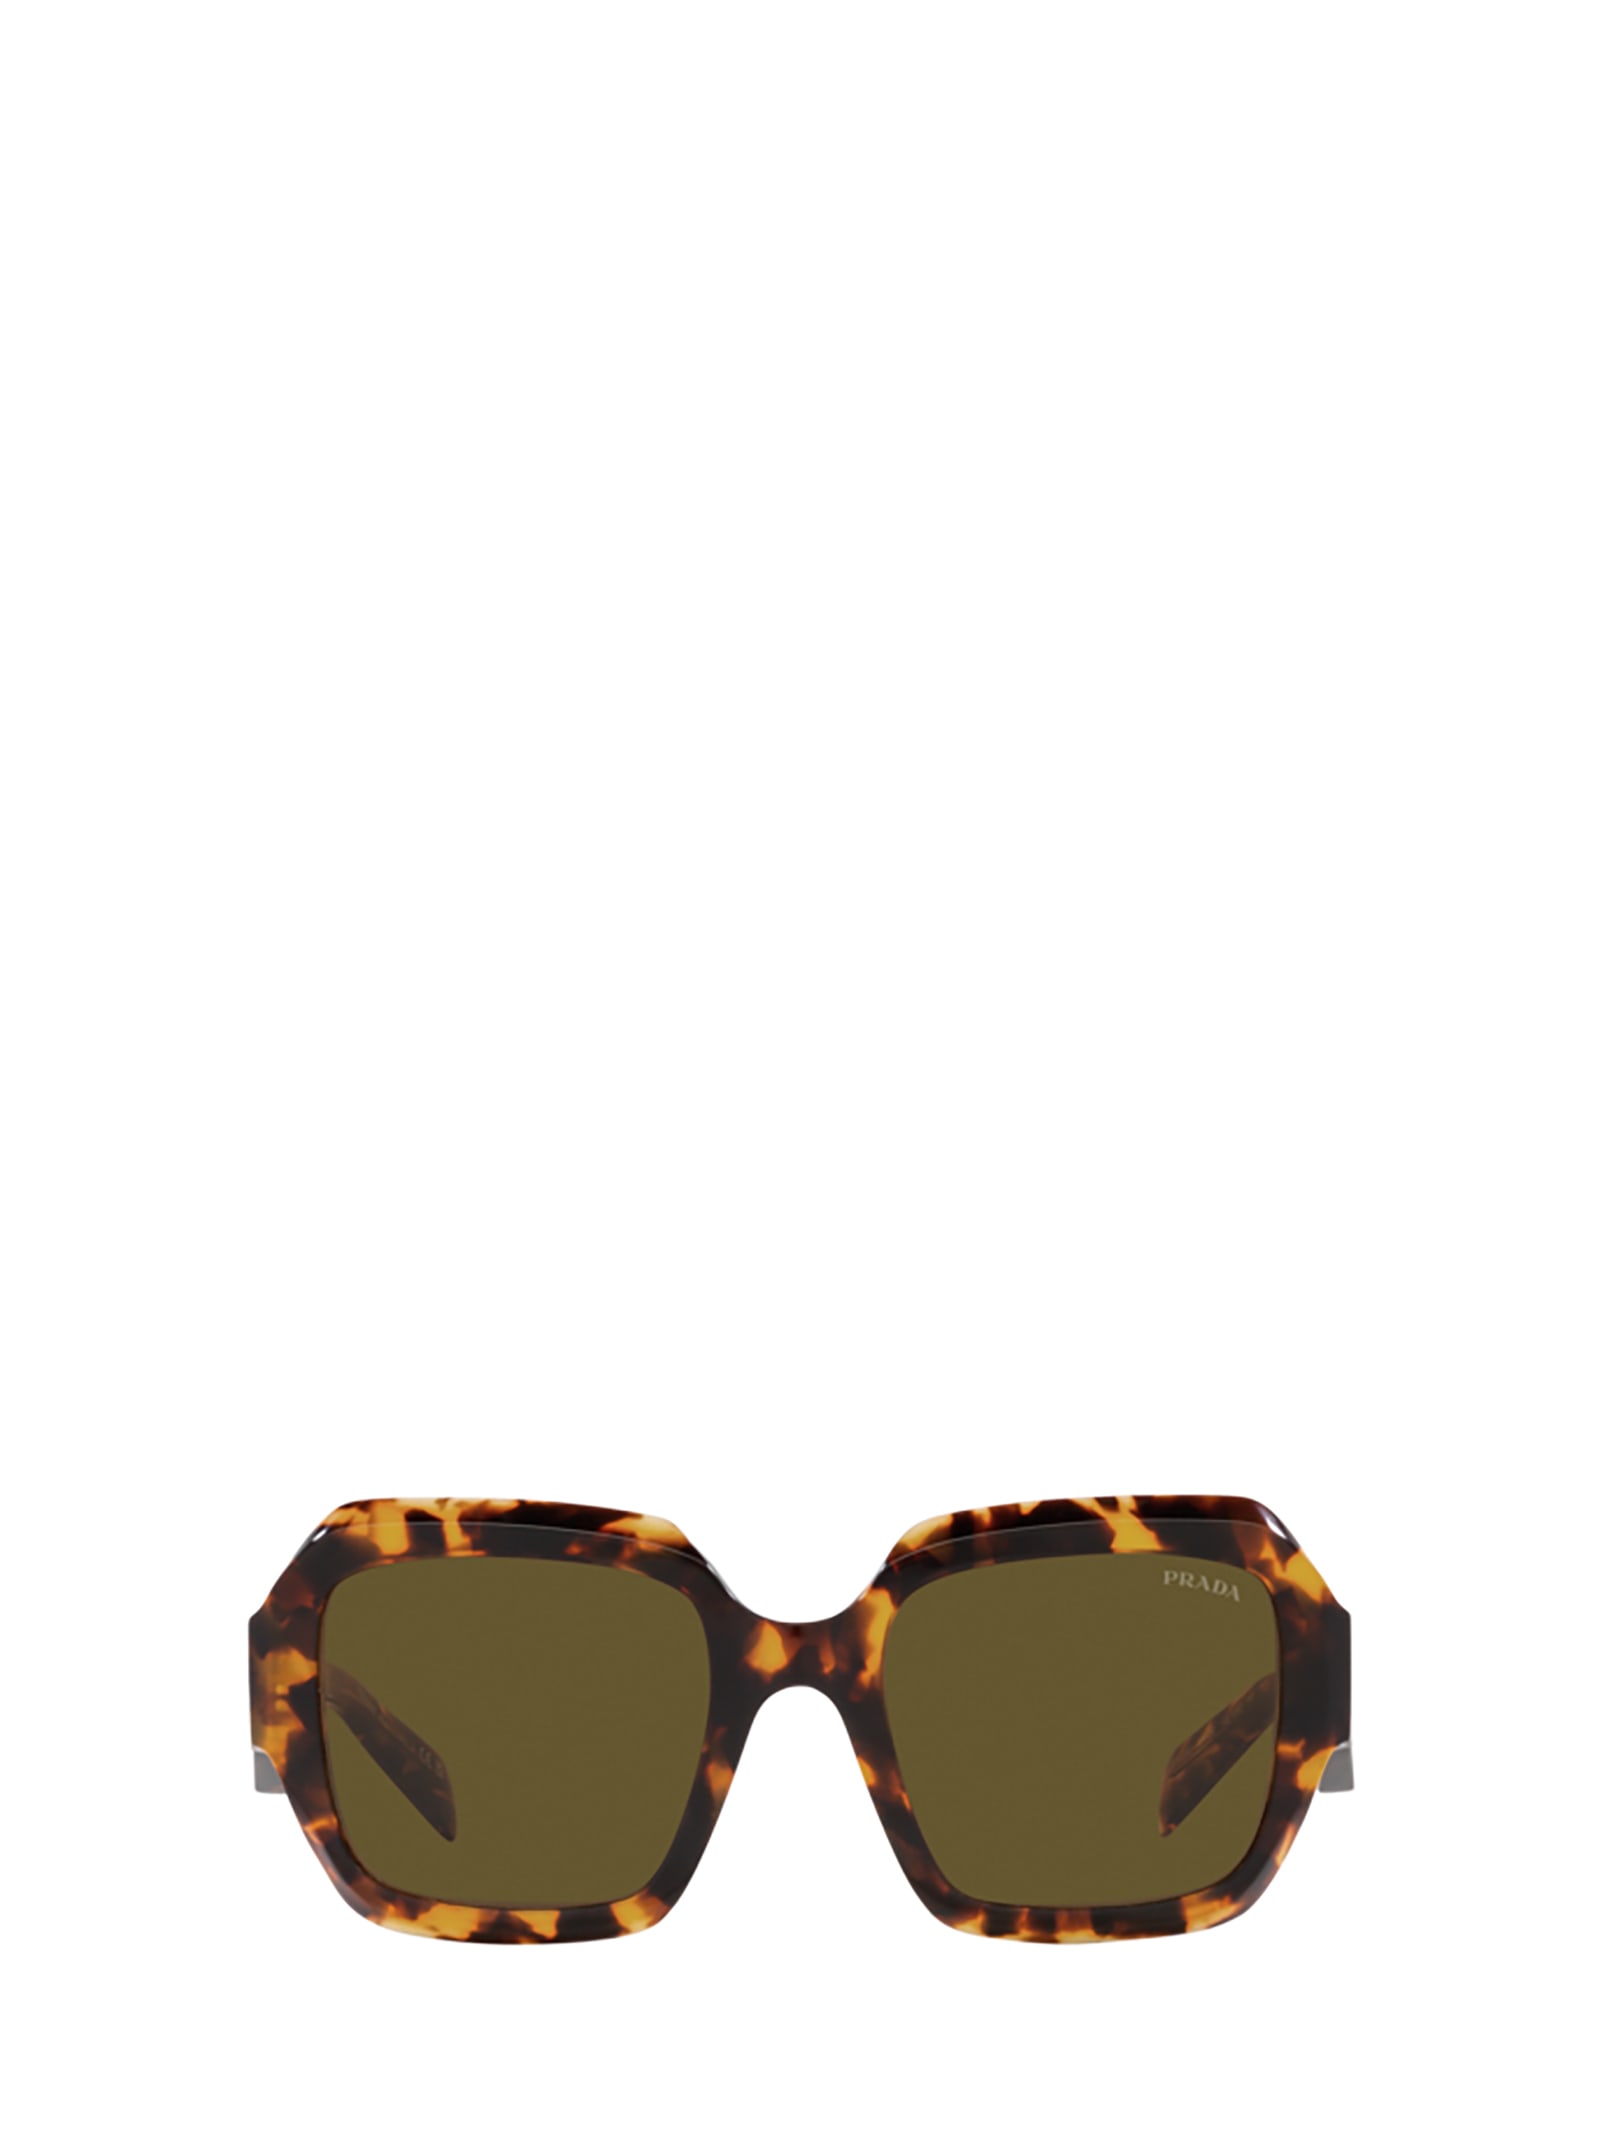 Prada Pr 28zs Sage / Honey Tortoise Sunglasses